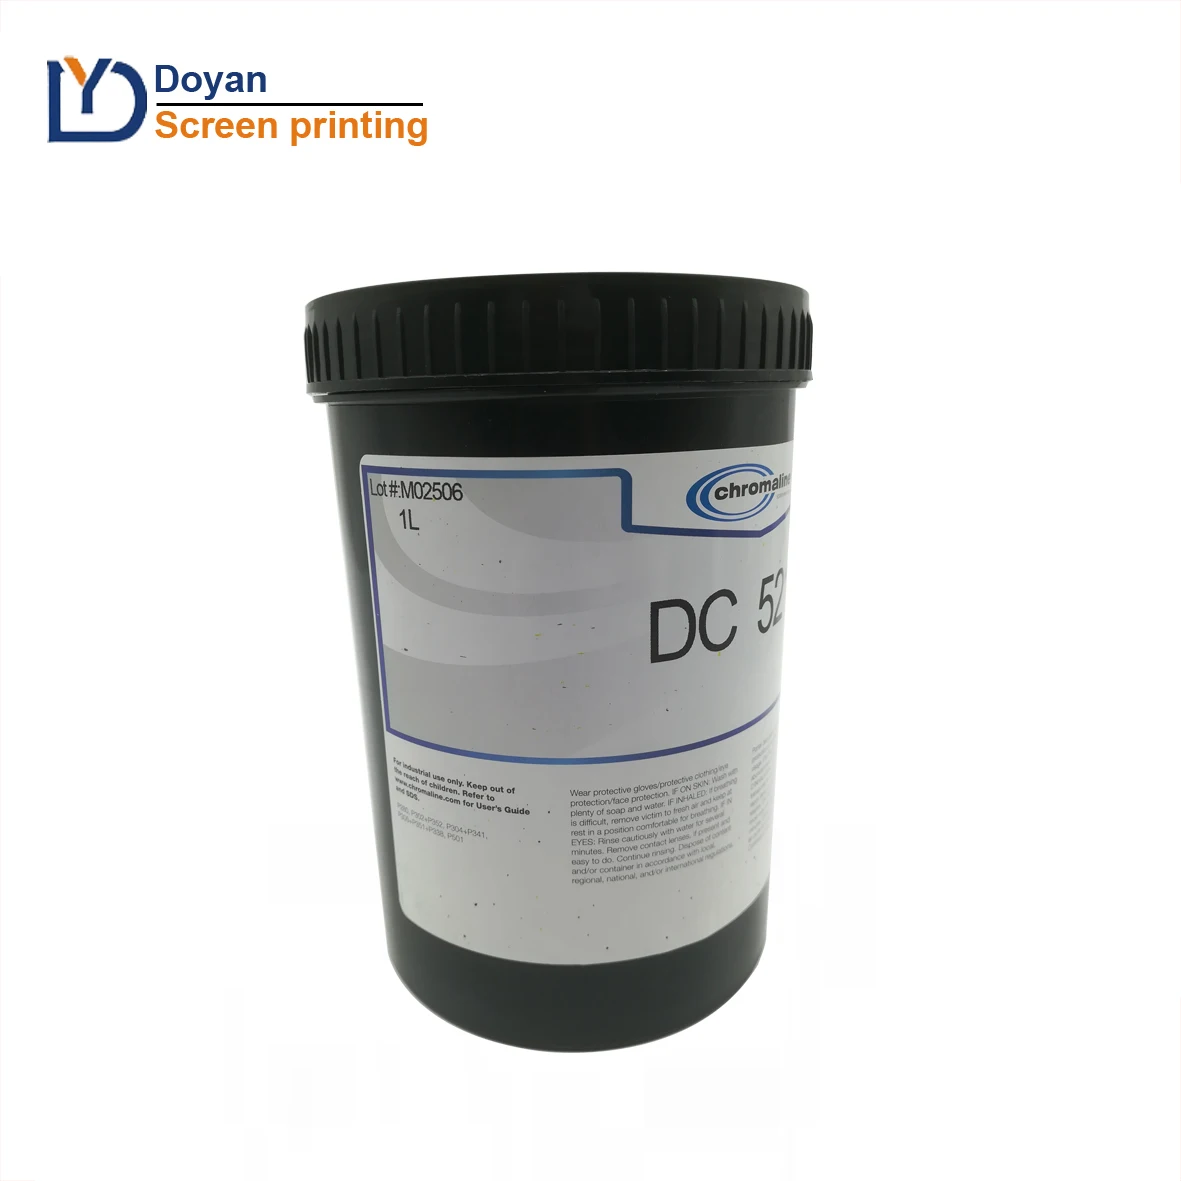 Chromaline Diazo Photo Emulsion Dc521 - Buy Photo Emulsion,Chromaline ...